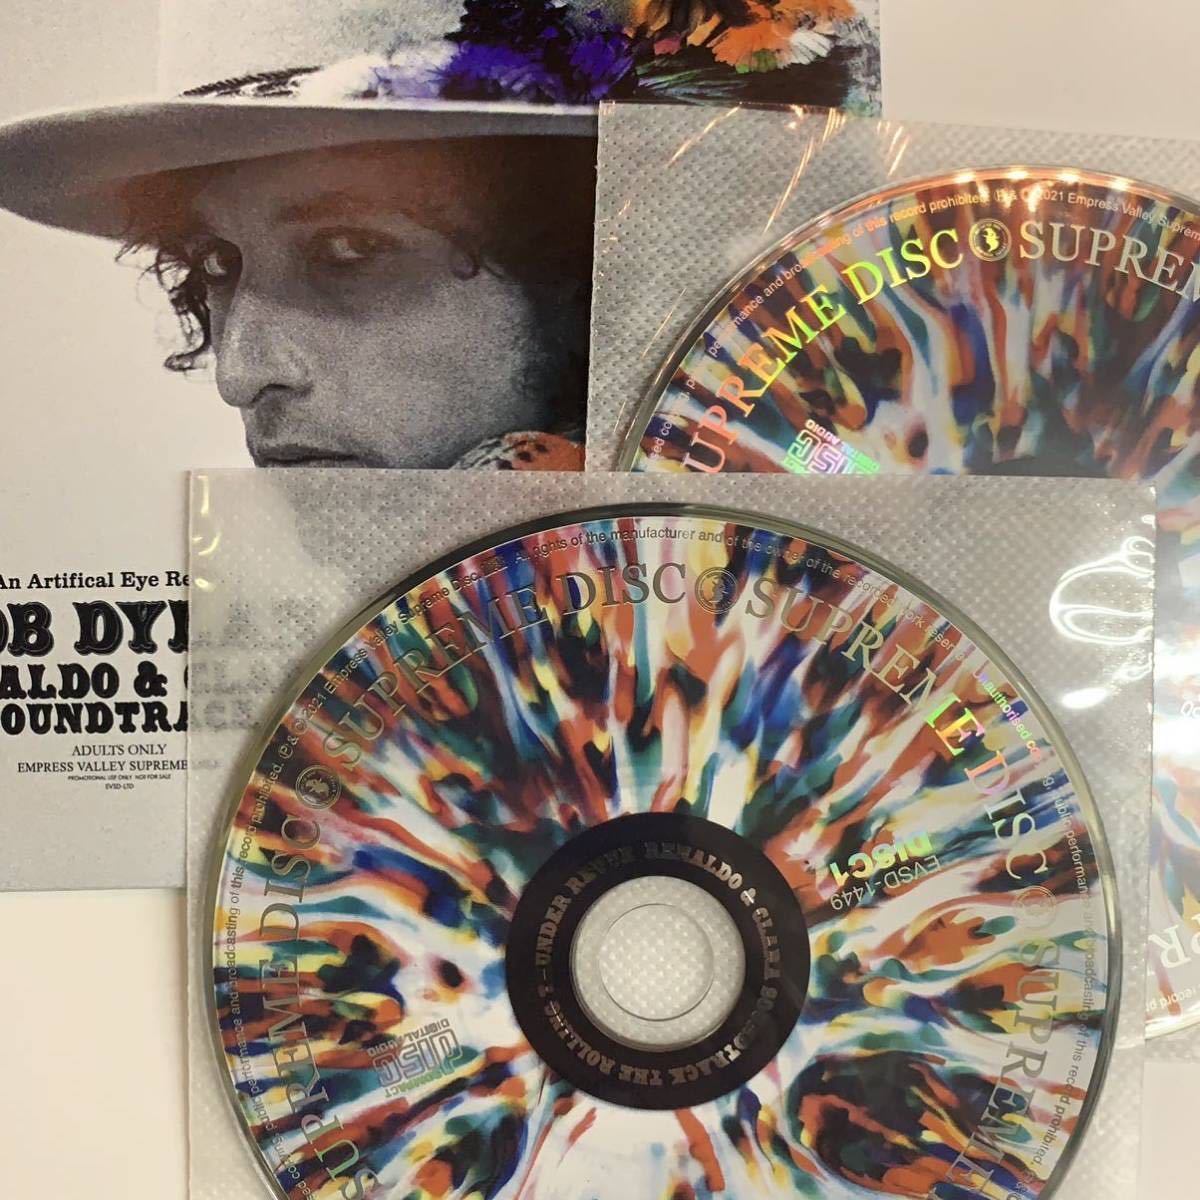 BOB DYLAN / RENALDO & CLARA soundtrack 2CD empress valley supreme disk プレスCD 紙ジャケット仕様　限定大特価！！！